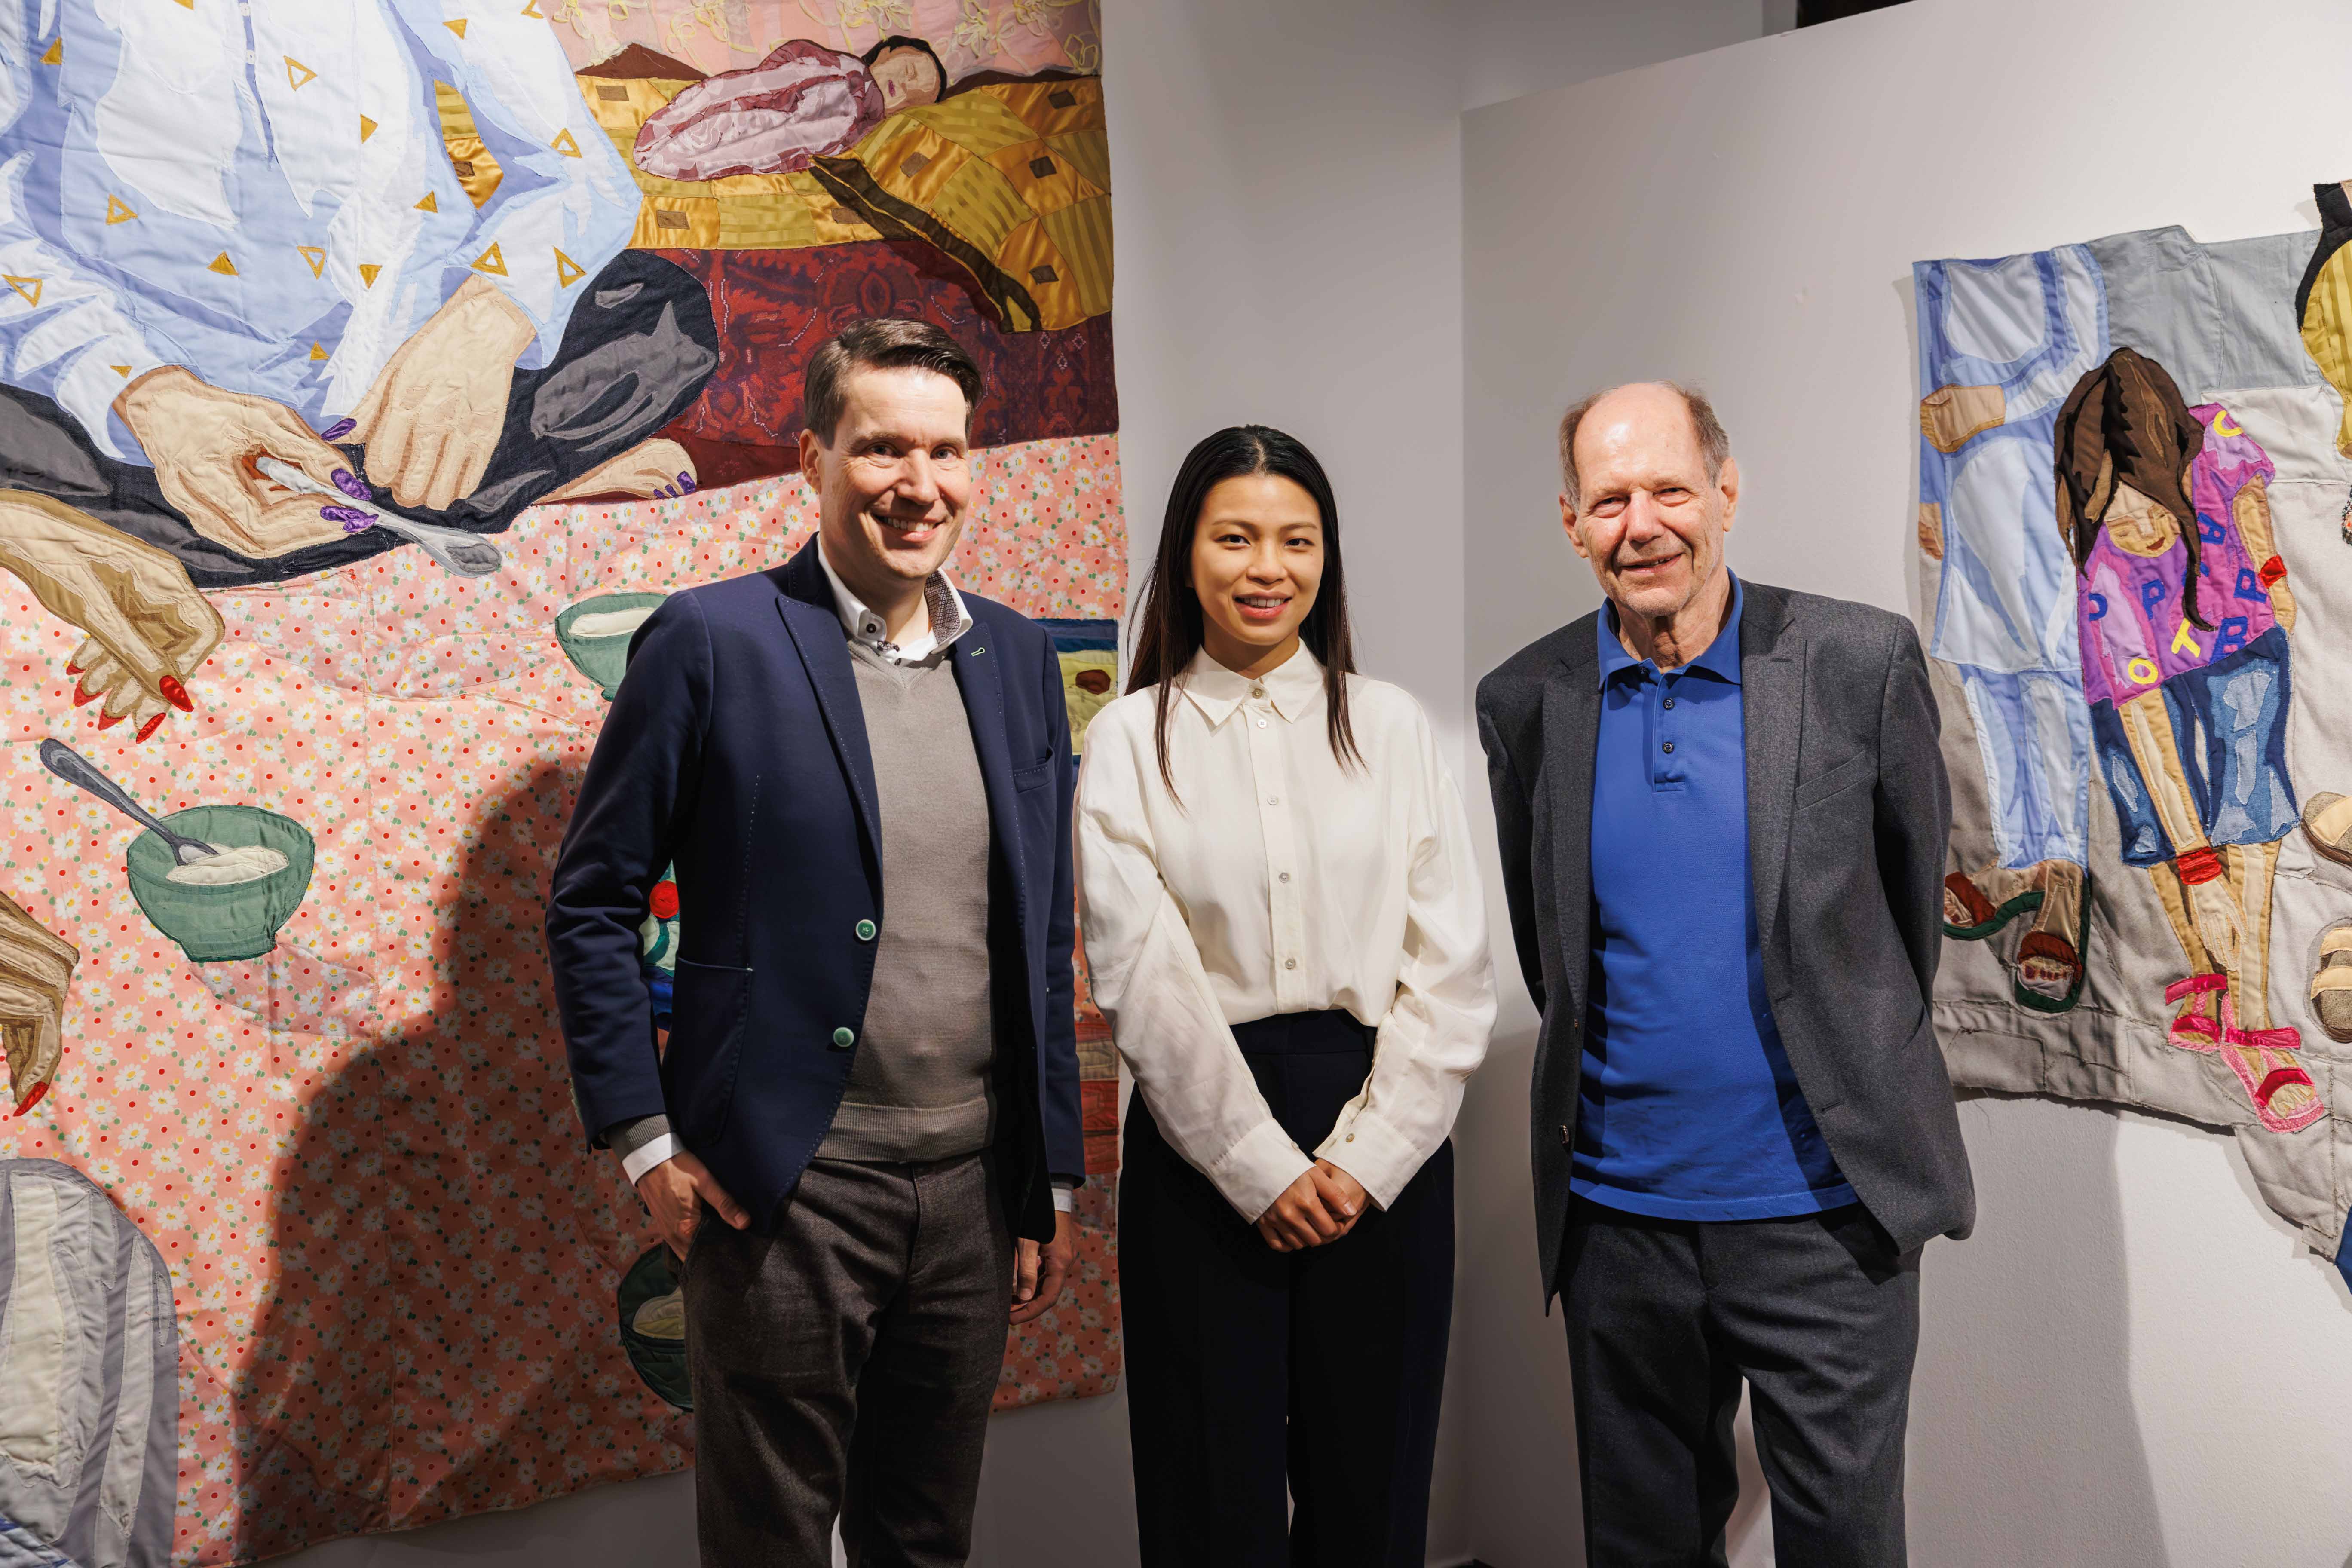 KWS Board Spokesman Dr. Felix Büchting, Yihsuan Chiu, Studio Manager of Hangama Amiri Studio and Michael Stoeber, art historian from Hanover